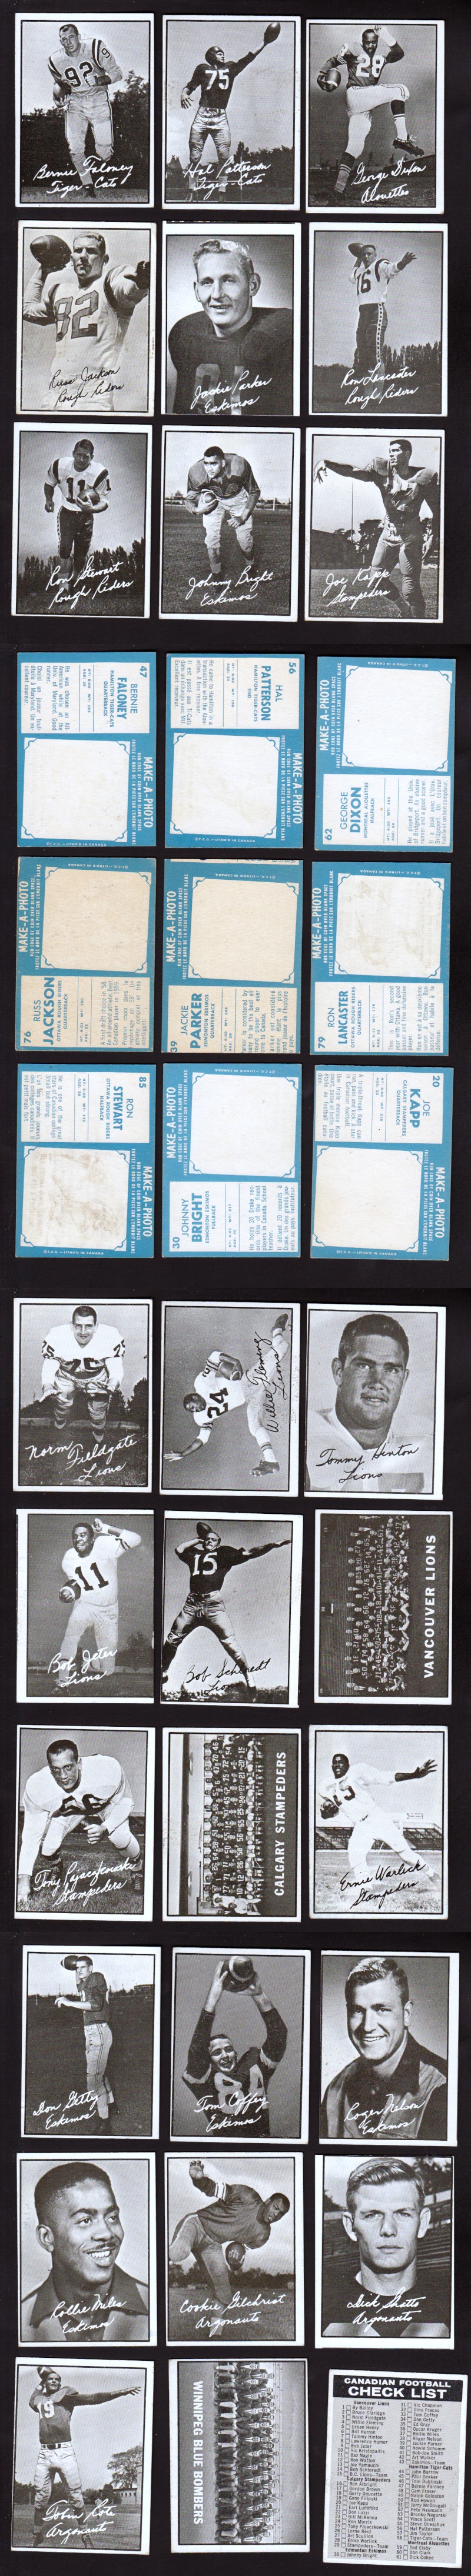 1961 CFL TOPPS FOOTBALL CARD FULL SET 132/132 photo